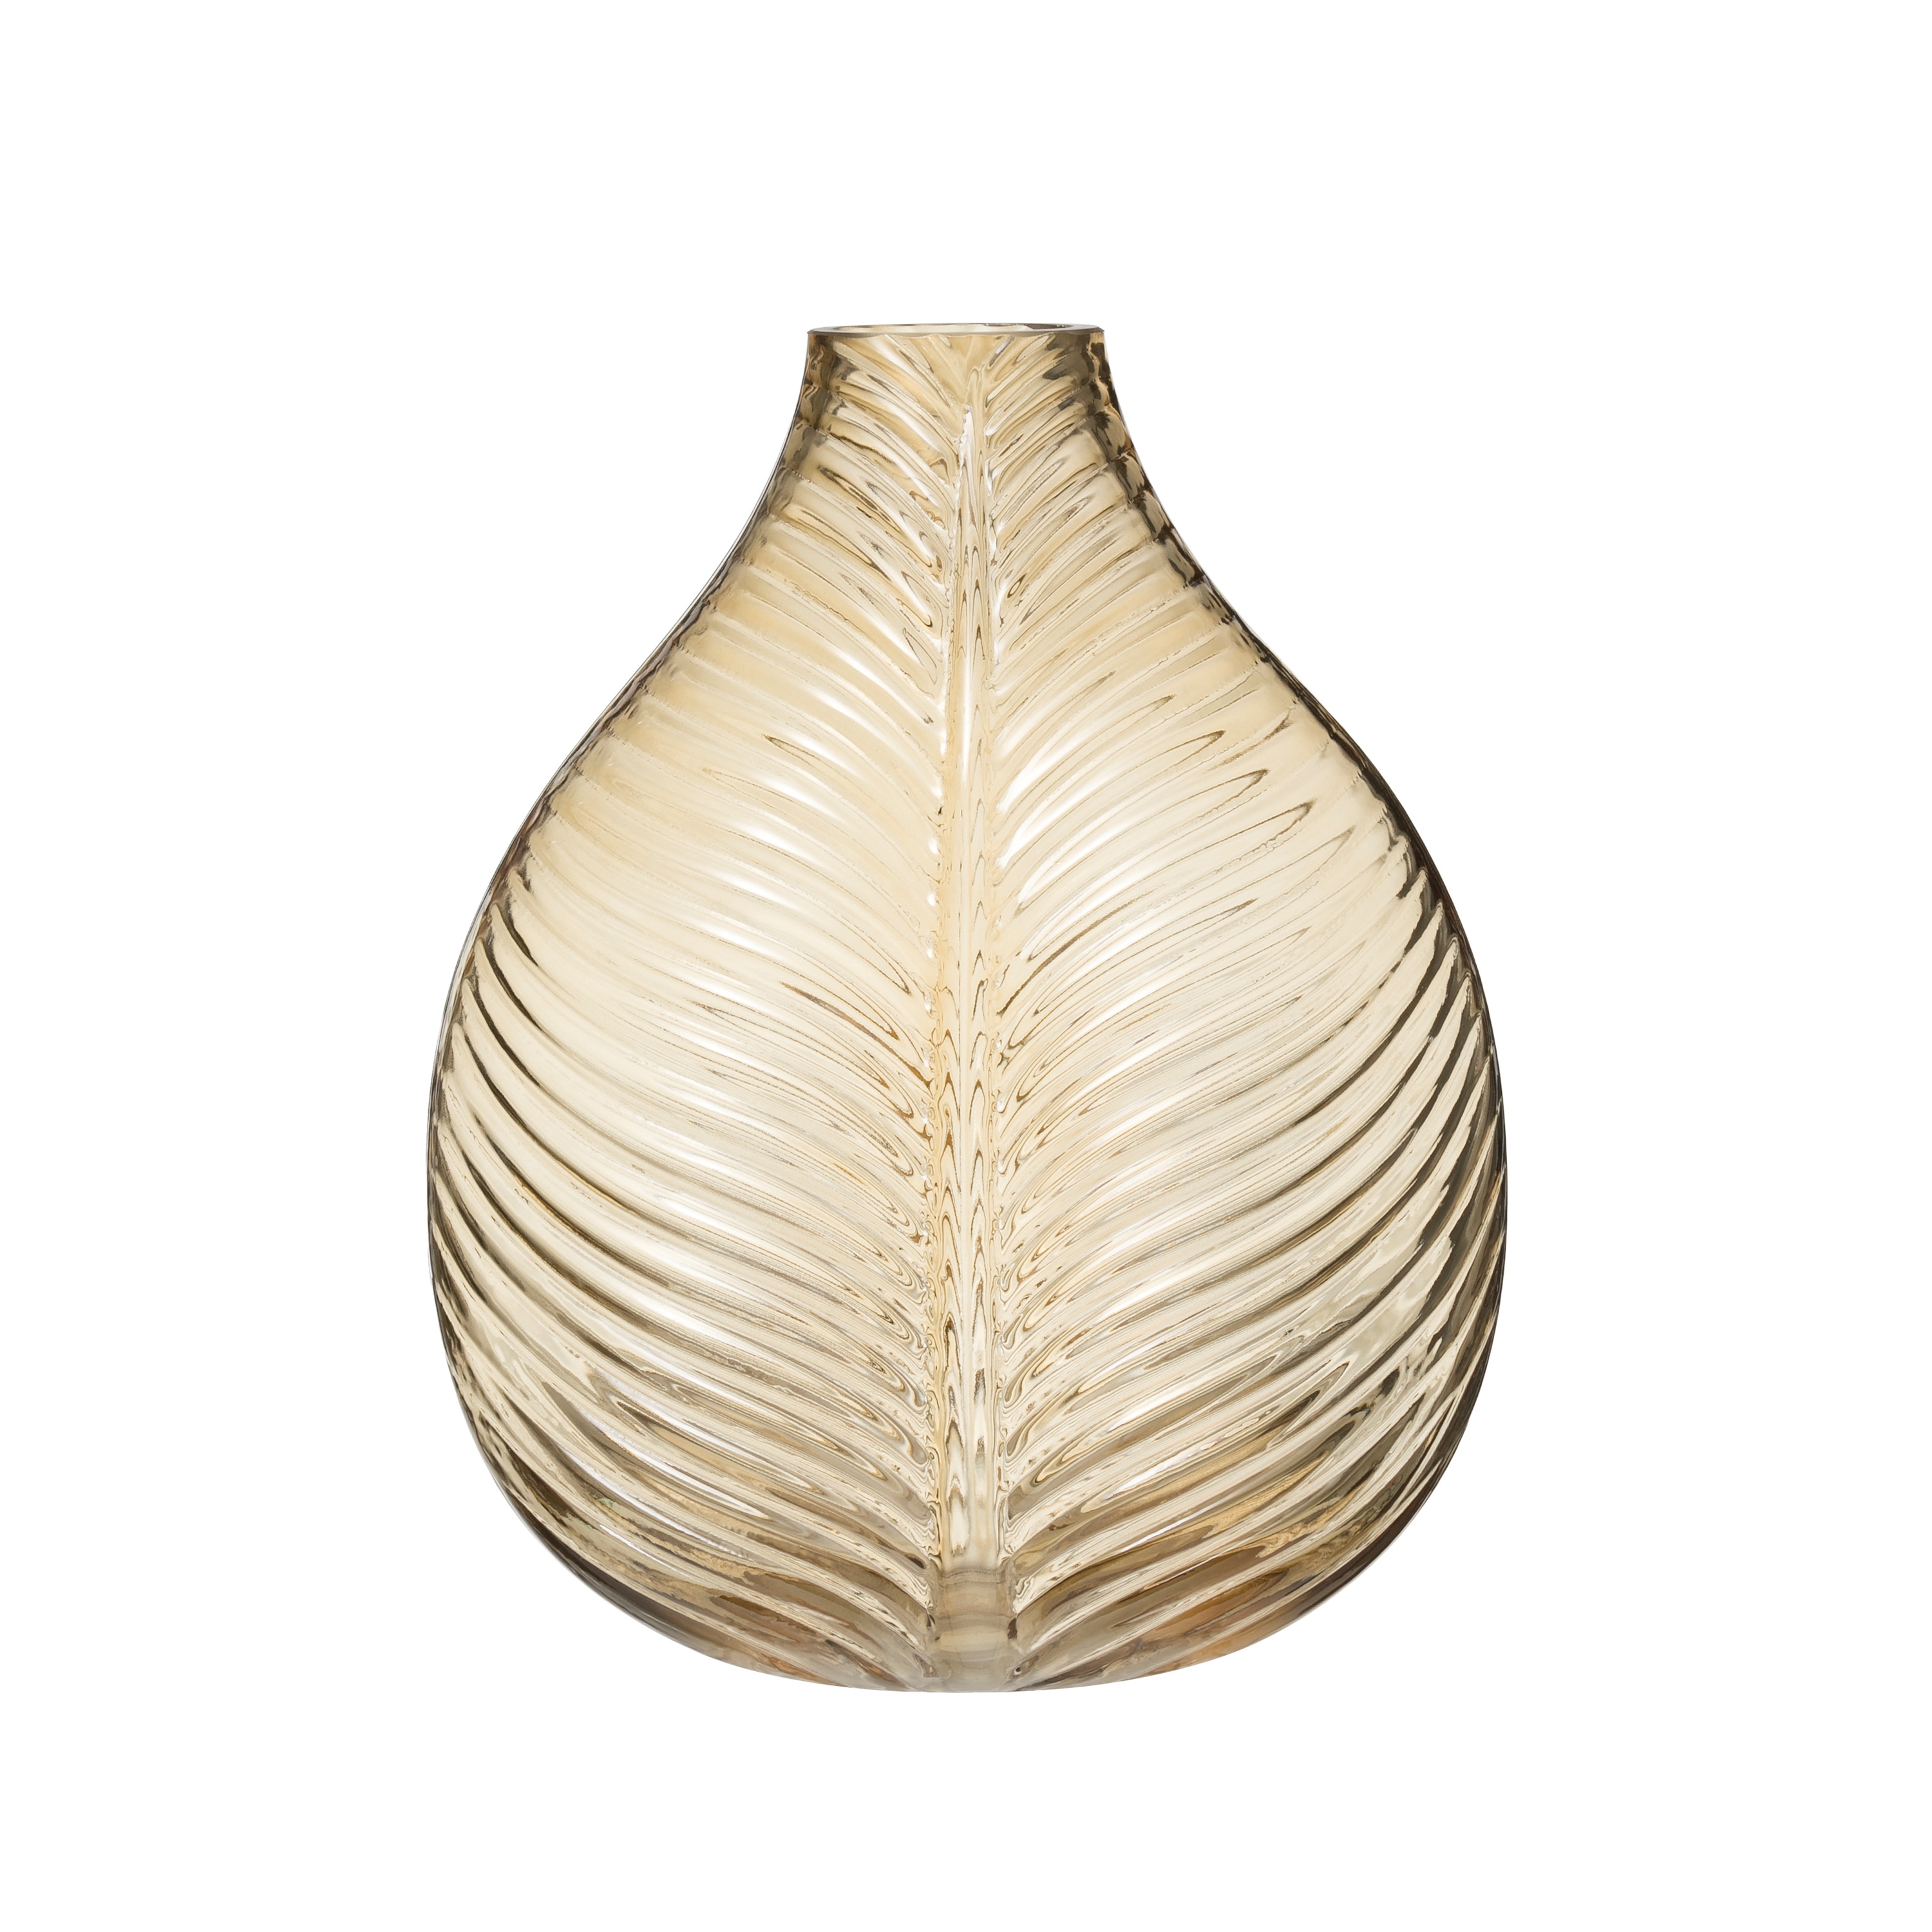 Glass Vase with Embossed Leaf Pattern - Image 0